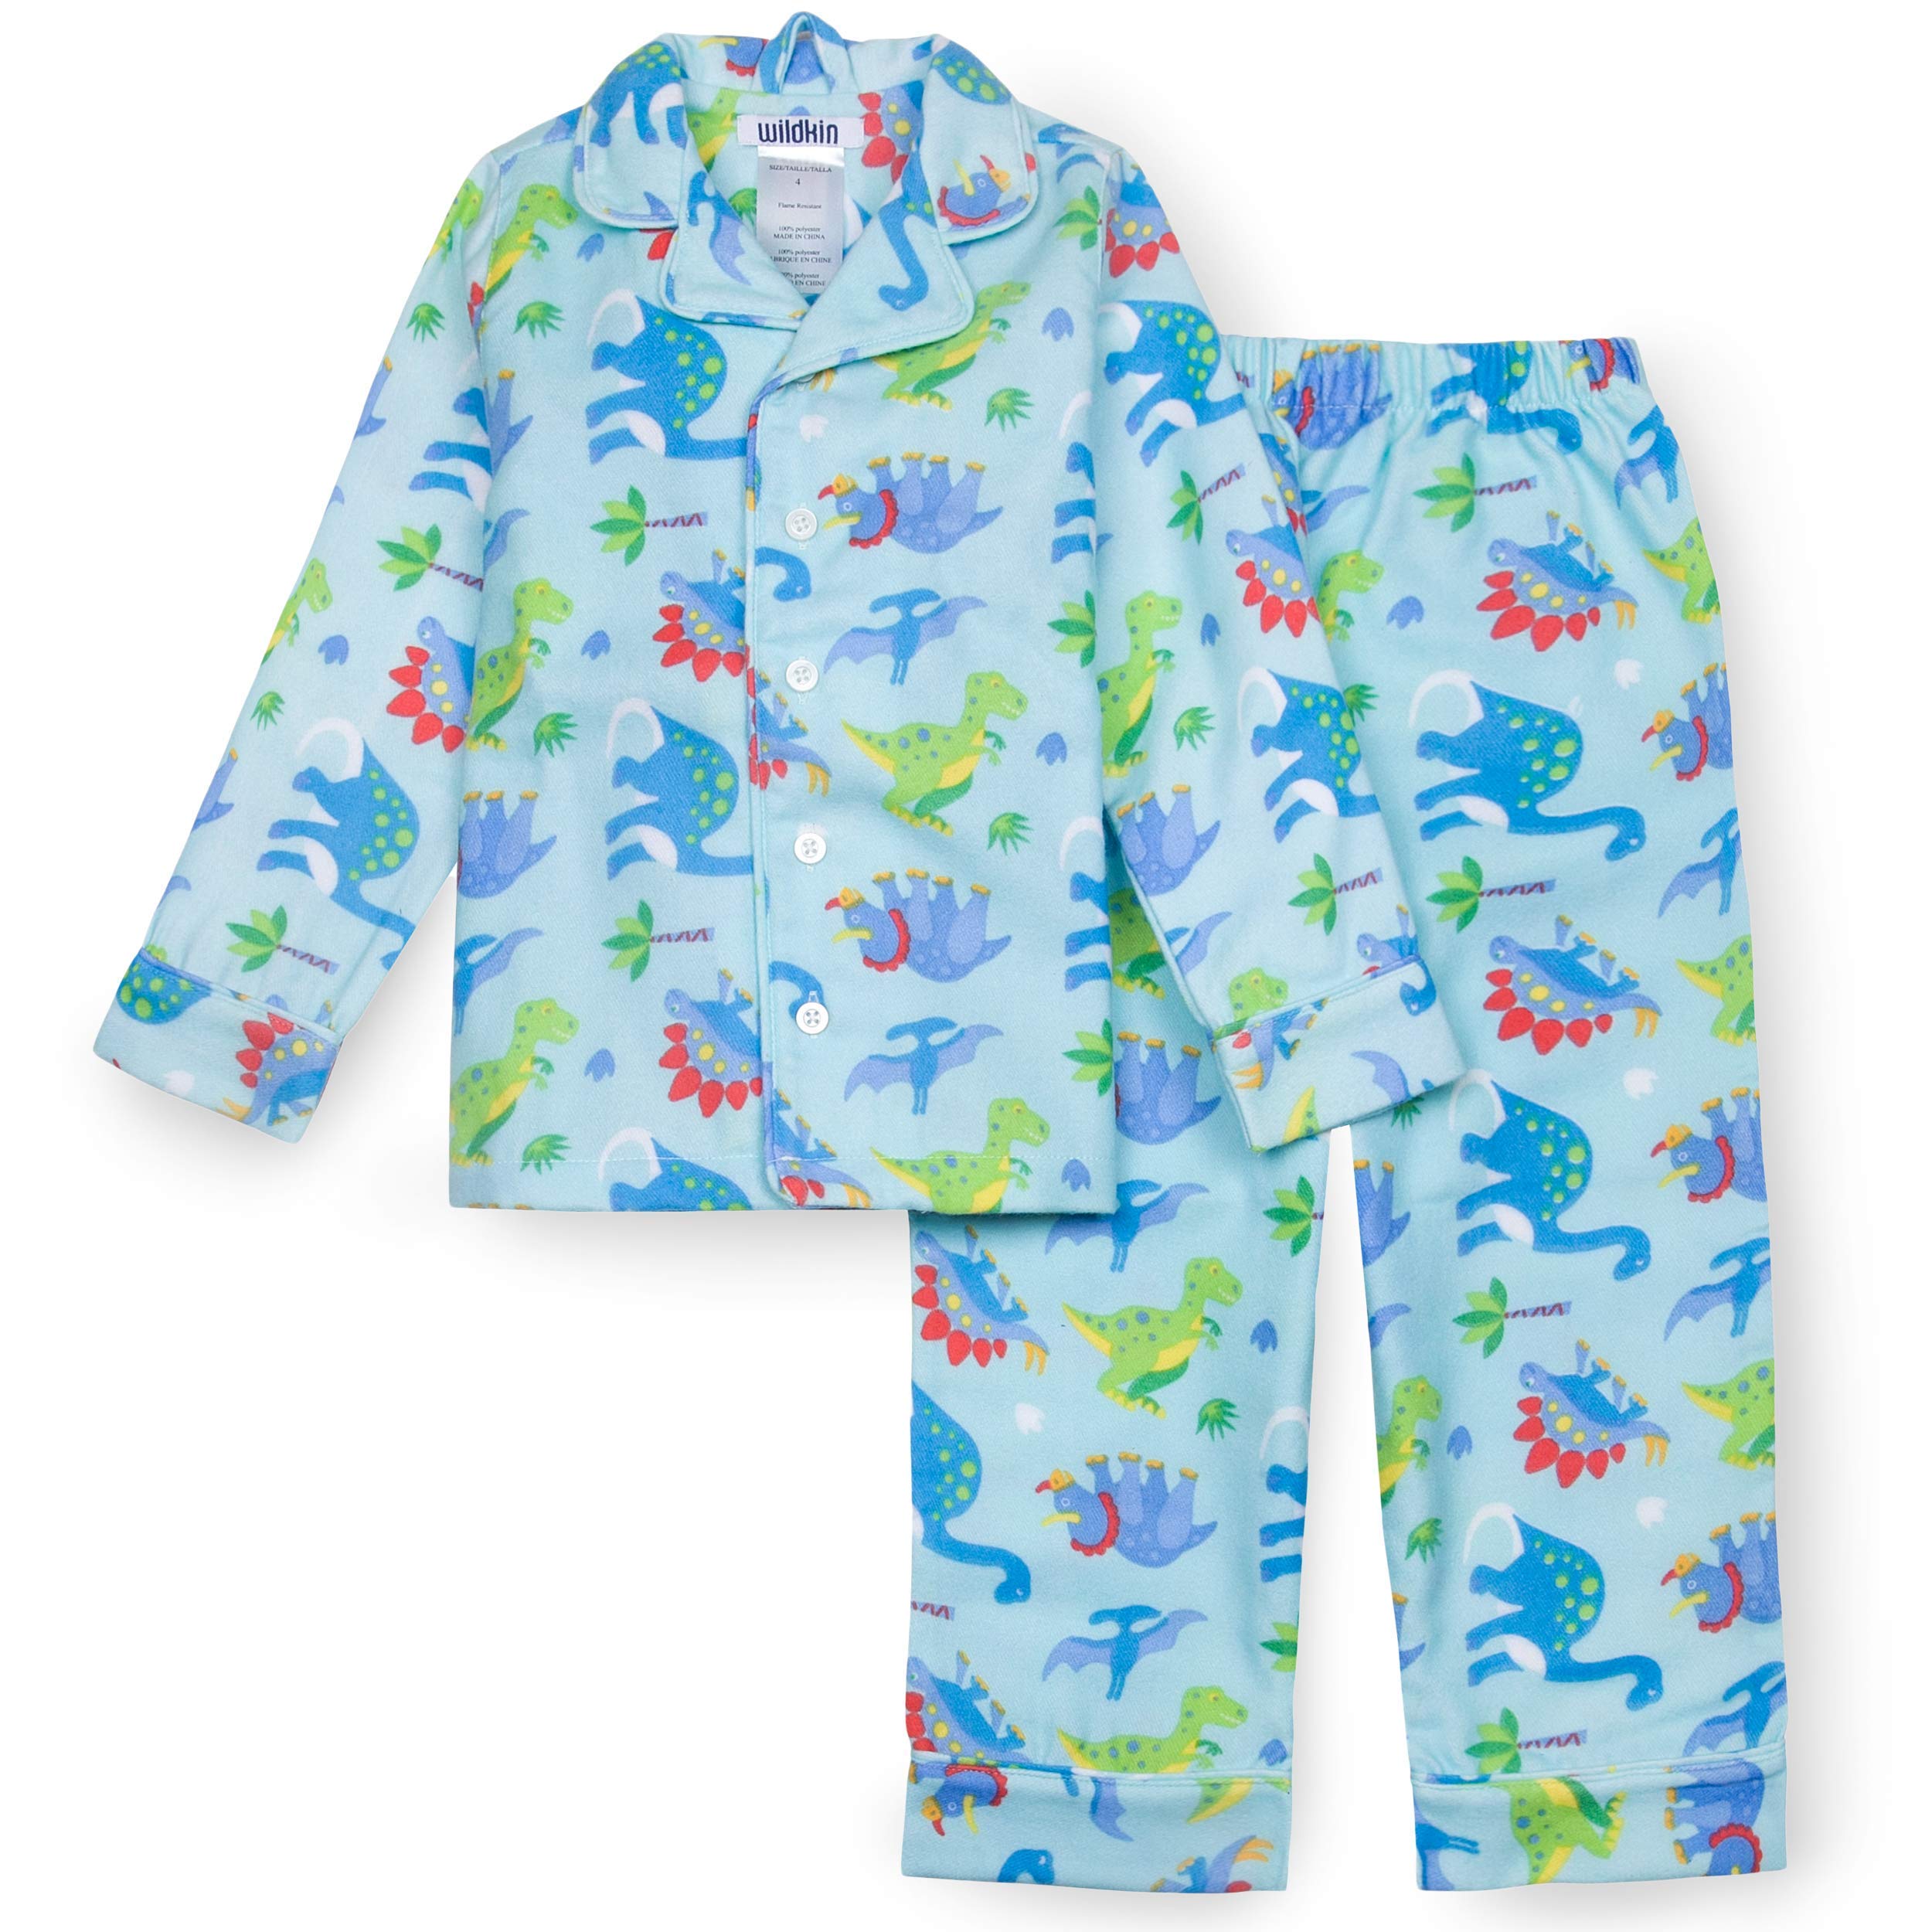 Wildkin Cotton 4 Pc Toddler Bed in a Bag Bundle with Pajama Set Size 2T (Dinosaur Land)